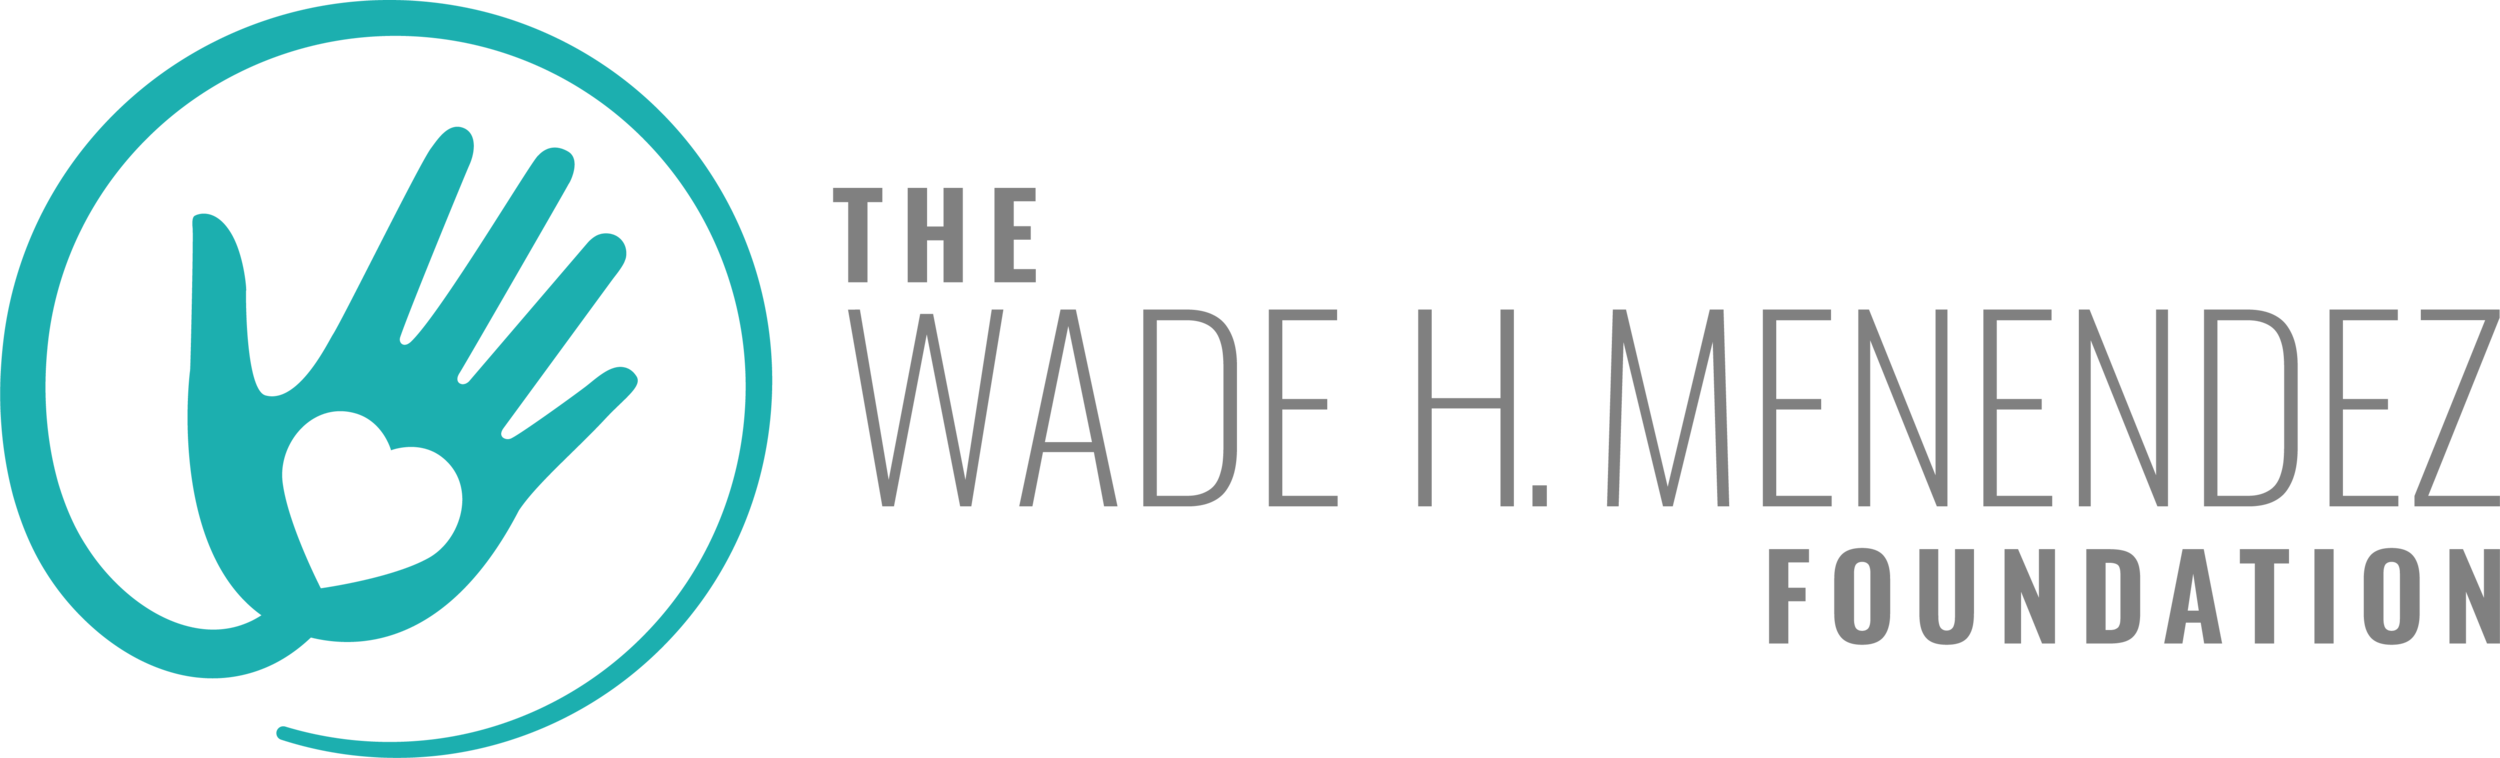 Wade H. Menendez Foundation